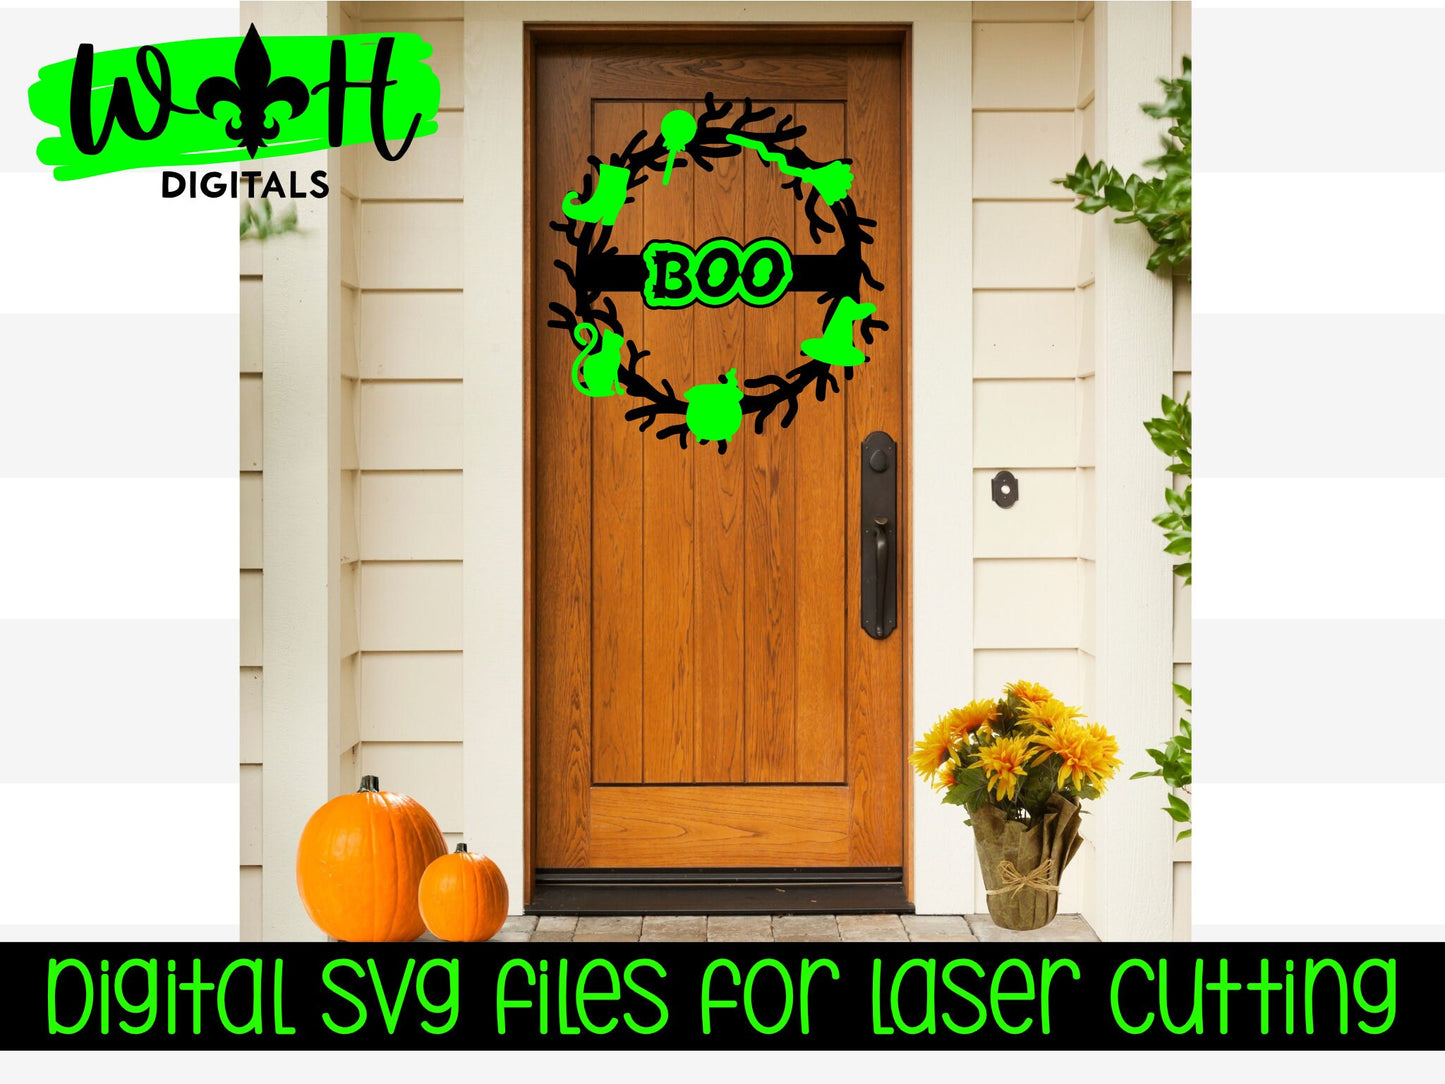 DIGITAL FILE - Boo Beware Halloween Door Wreath - Files for Sign Making - SVG Cut File For Glowforge